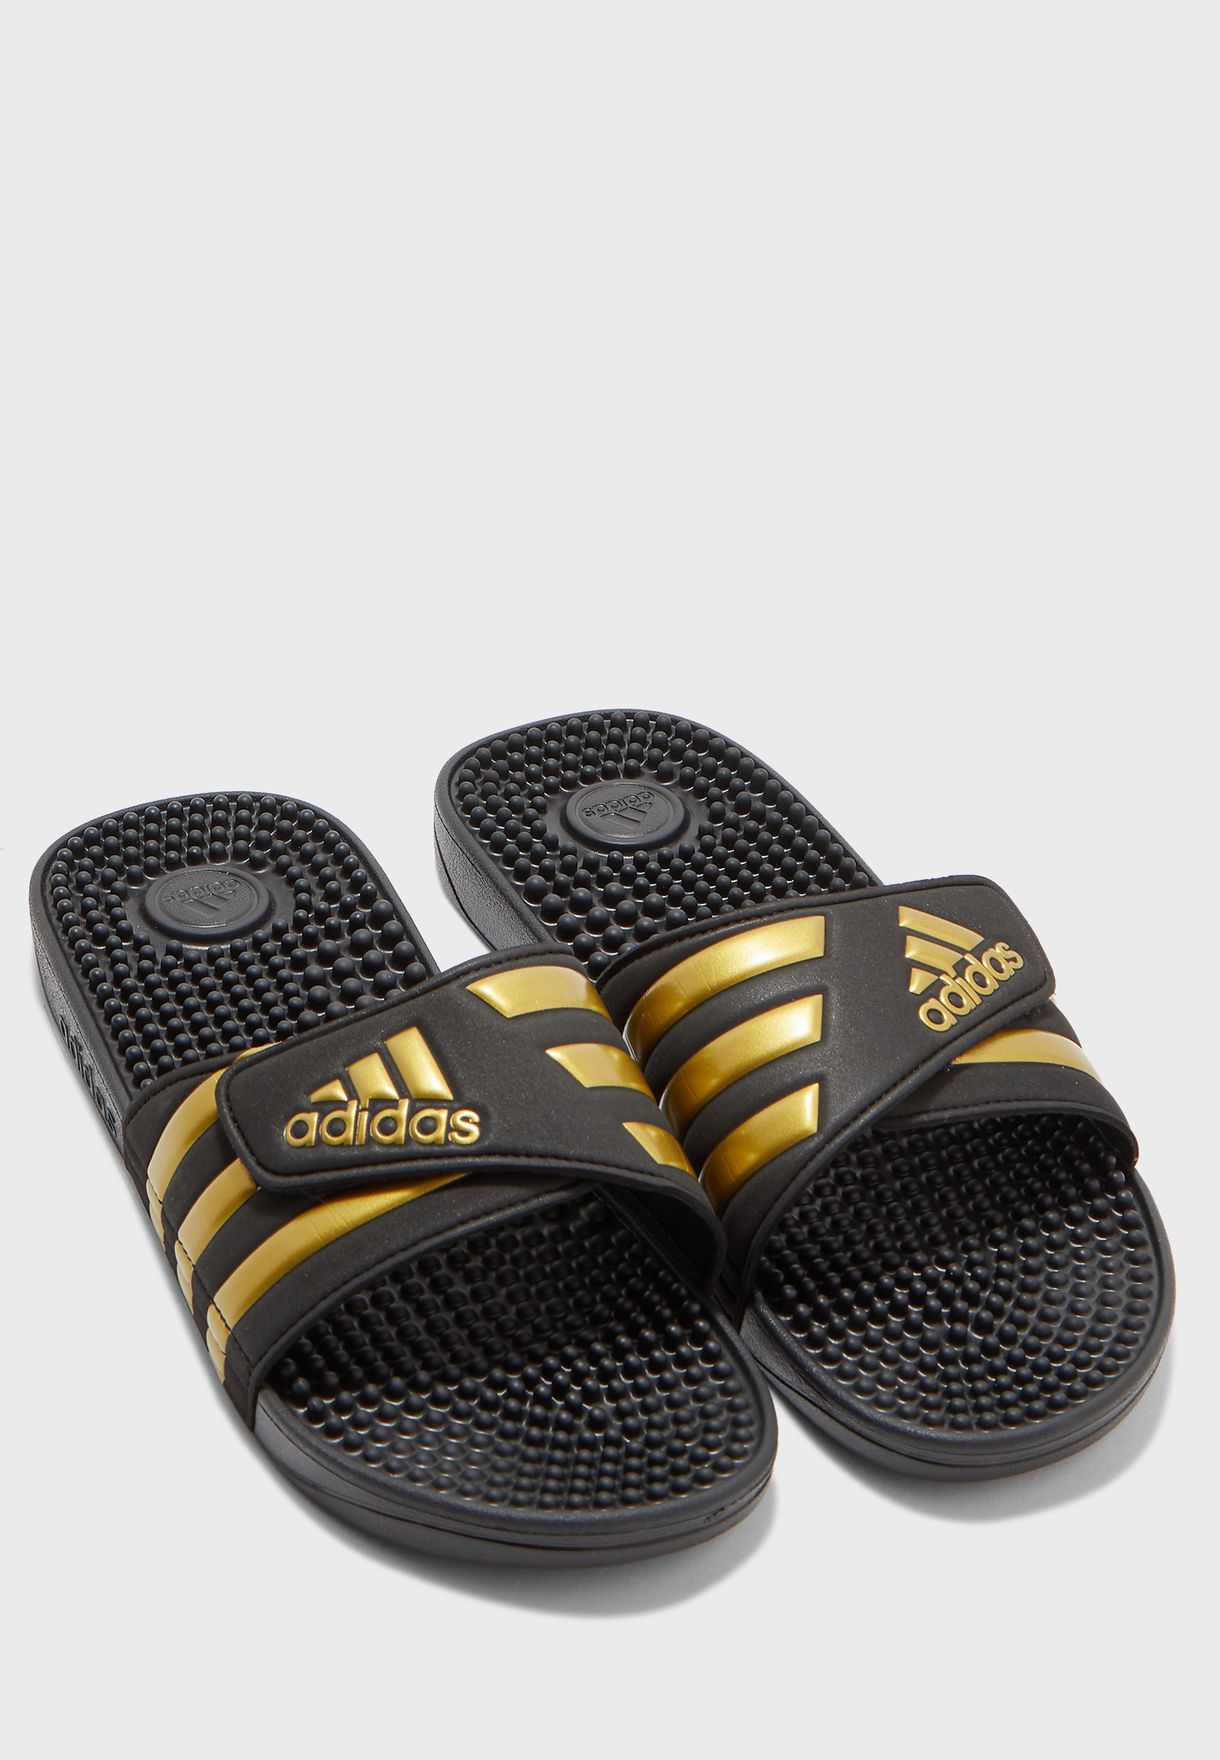 adidas adissage slides black and gold